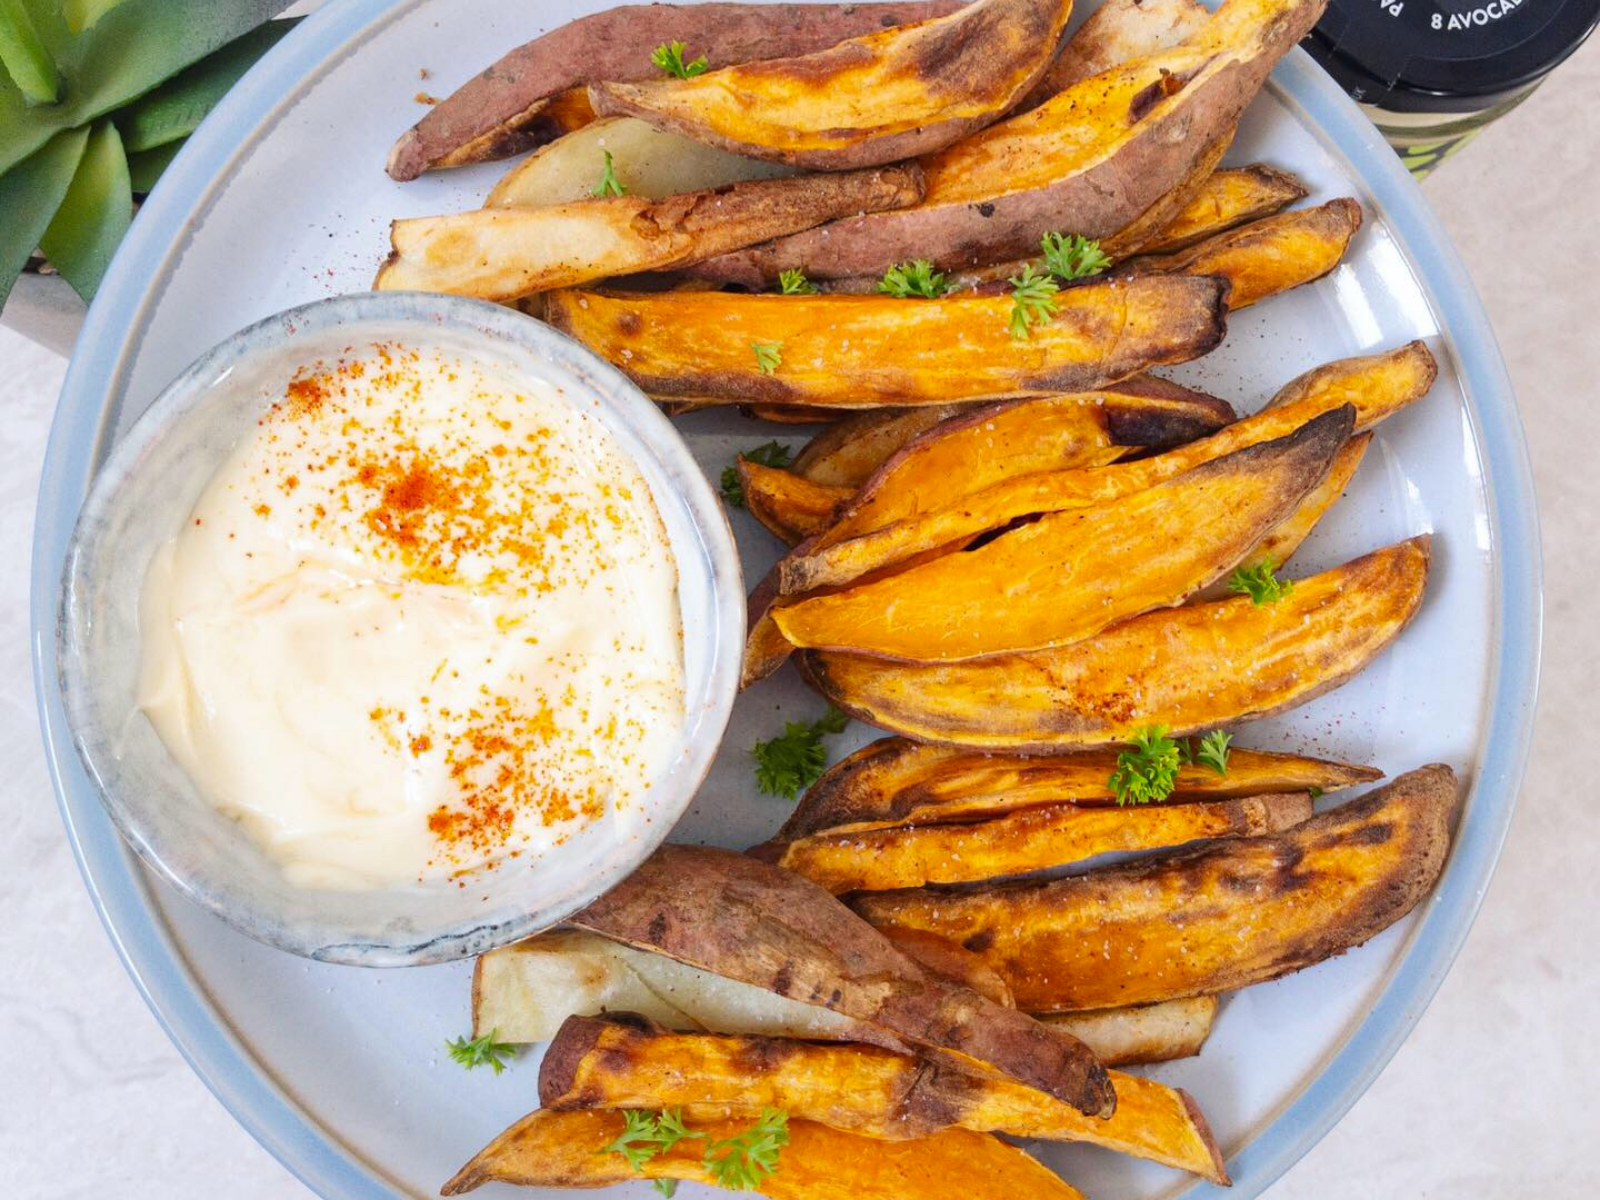 Sweet potato fries with vegan mayo dip